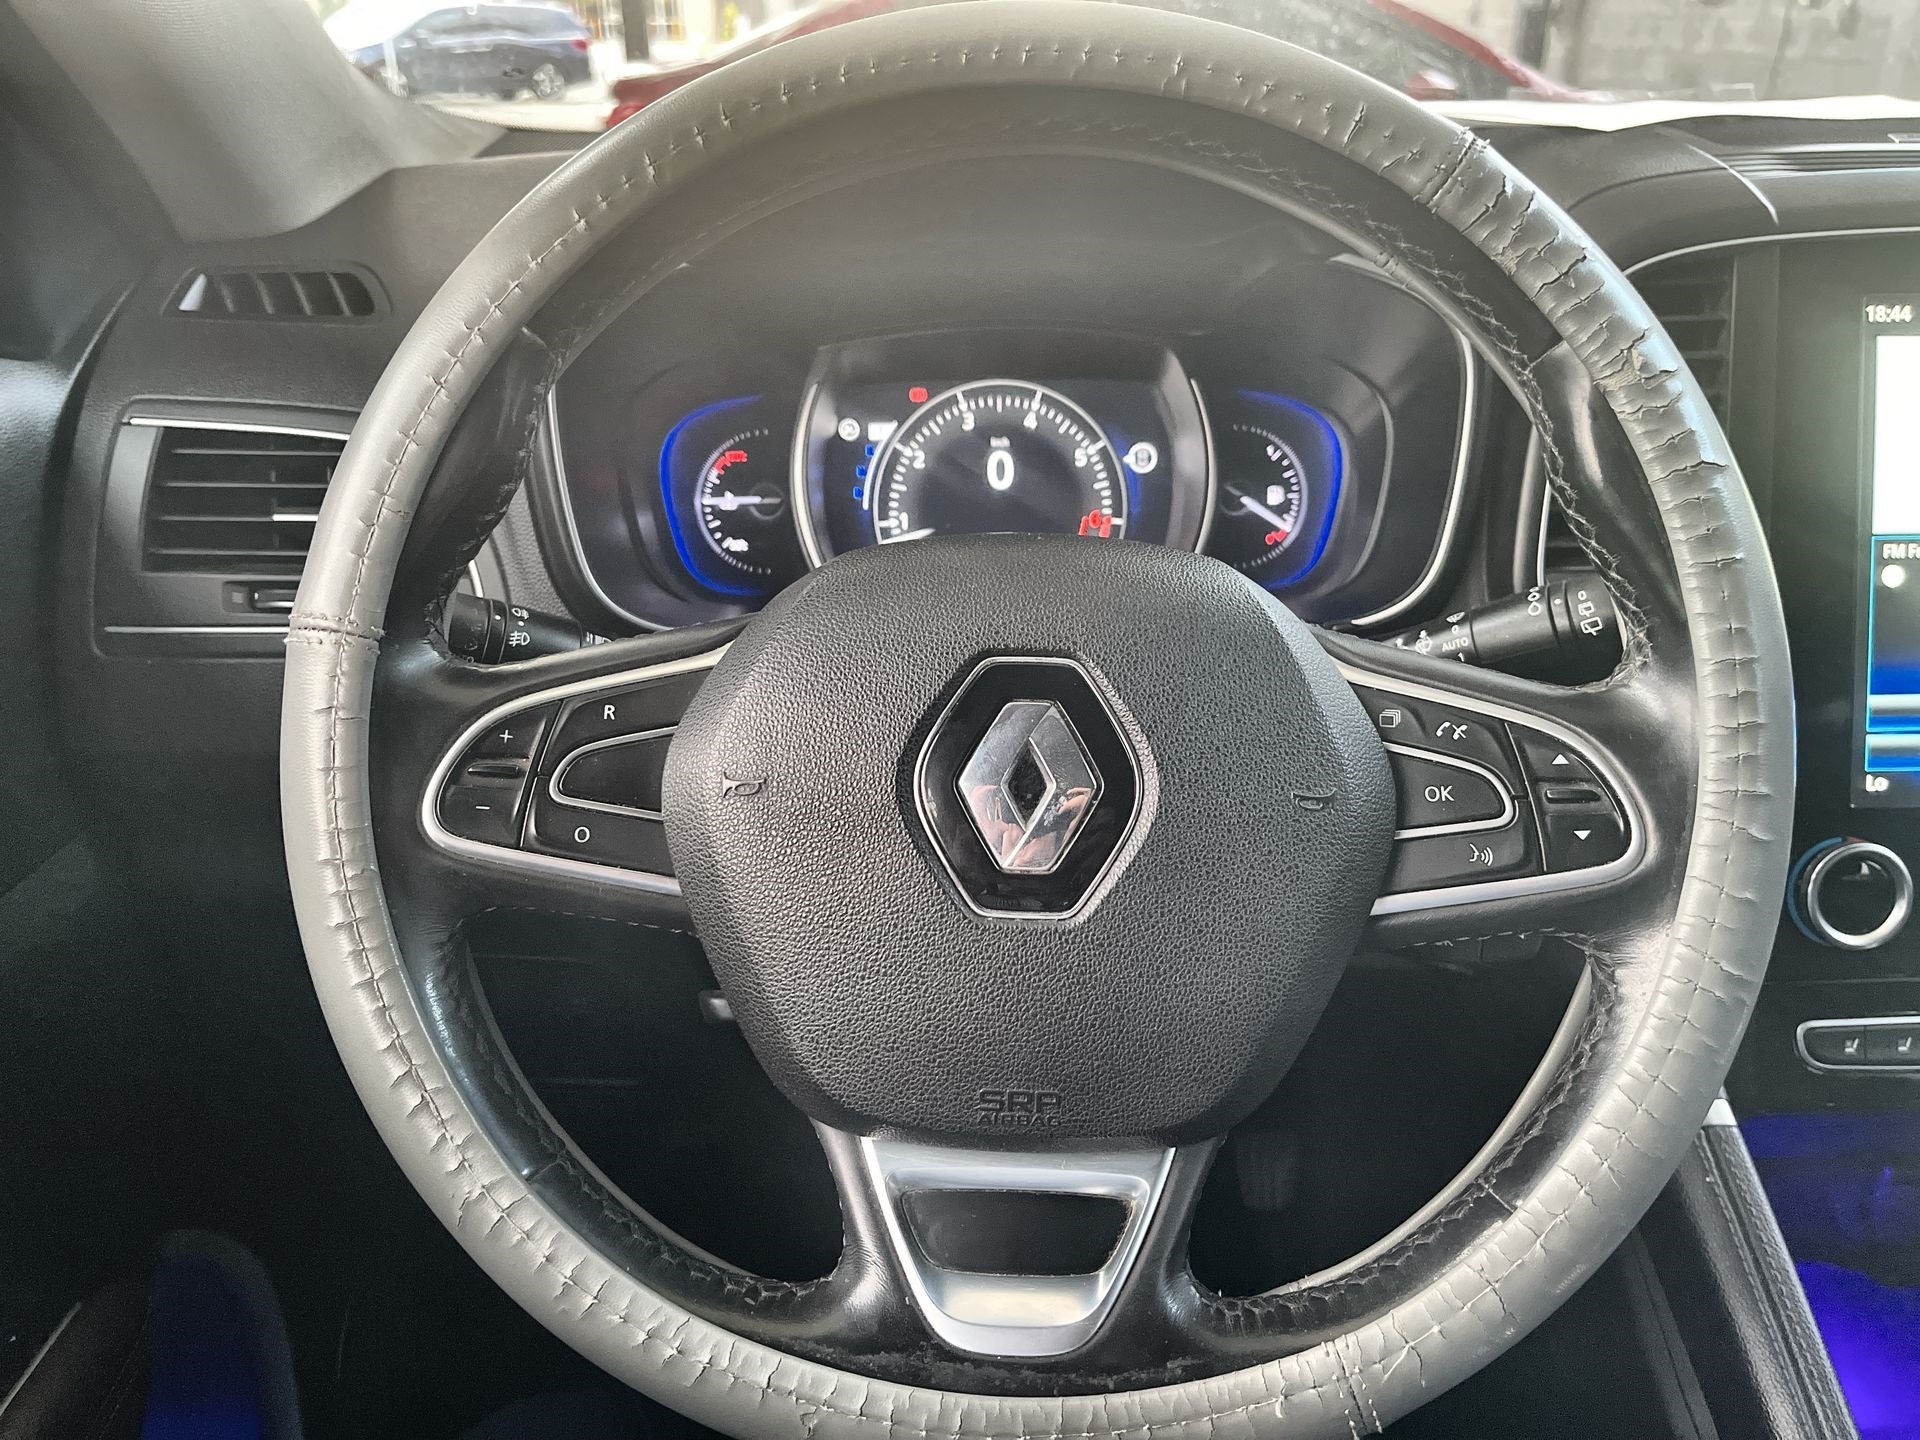 2017 Renault Koleos 2.5 Iconic Piel Cvt